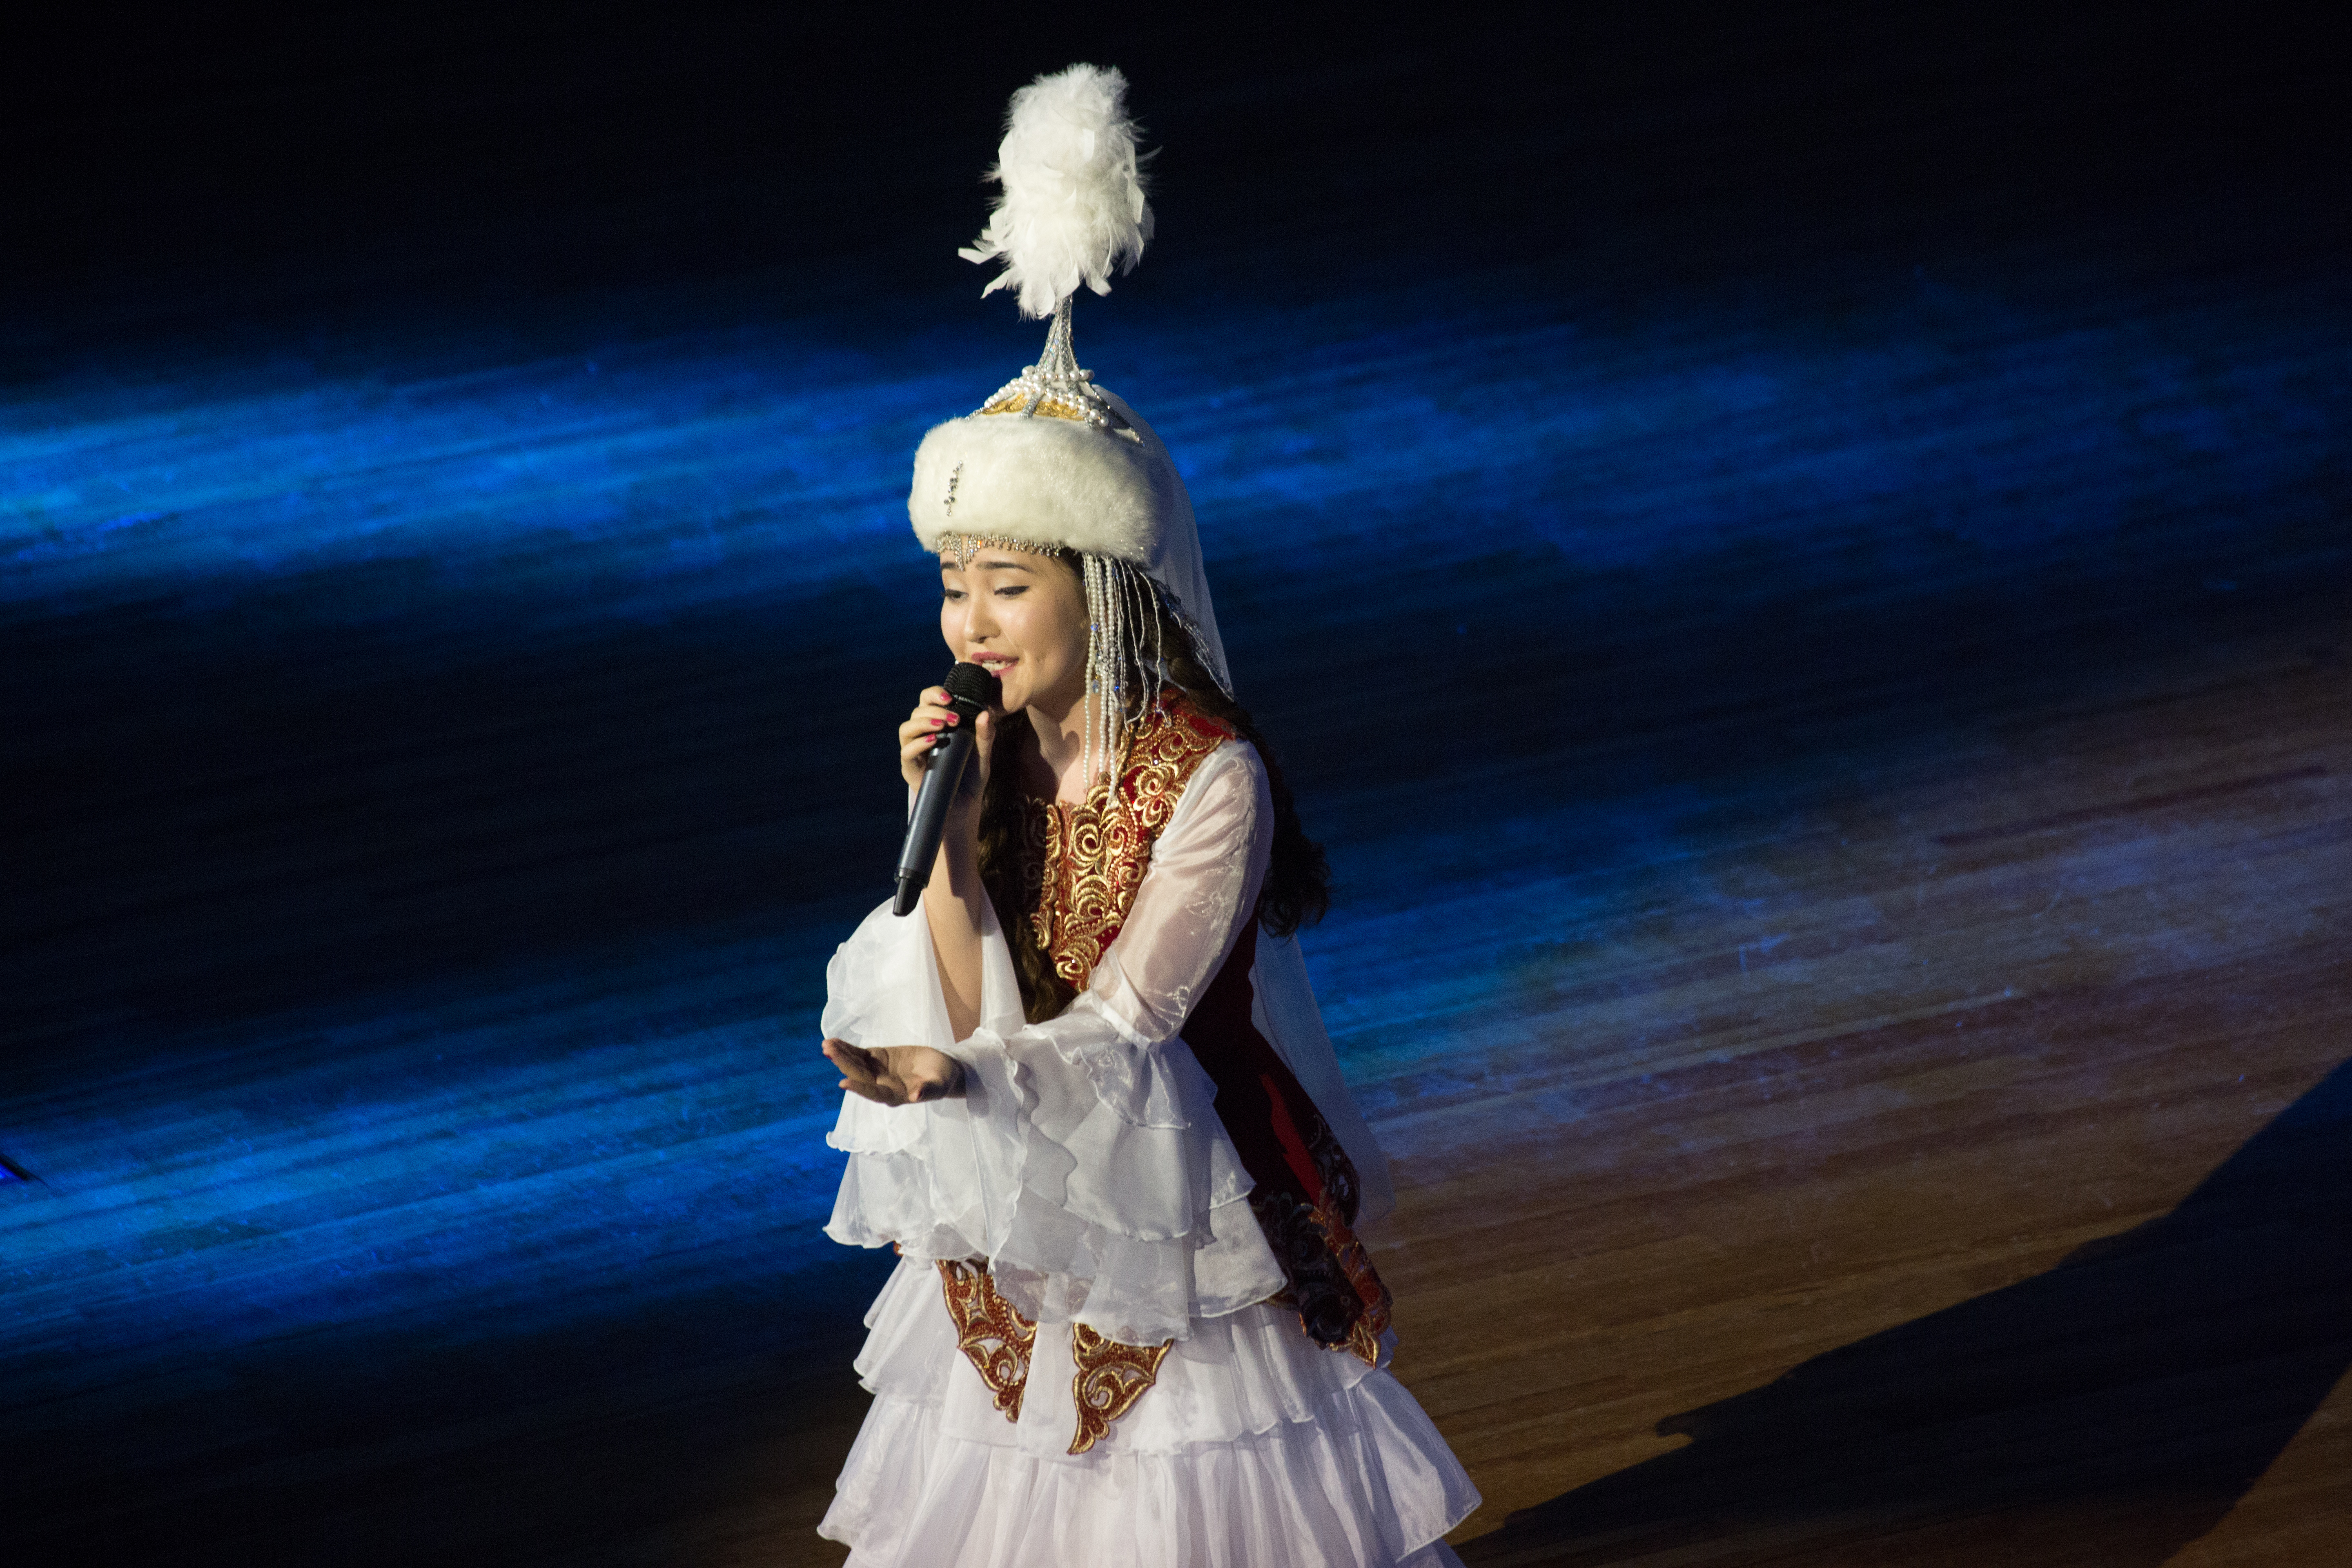 Популярная казахская музыка. Казашка танцует. Алтын на голове. Казахские песни популярные исполняет женщина. Кумыкская песня Алтын Кызыл чачларынг.